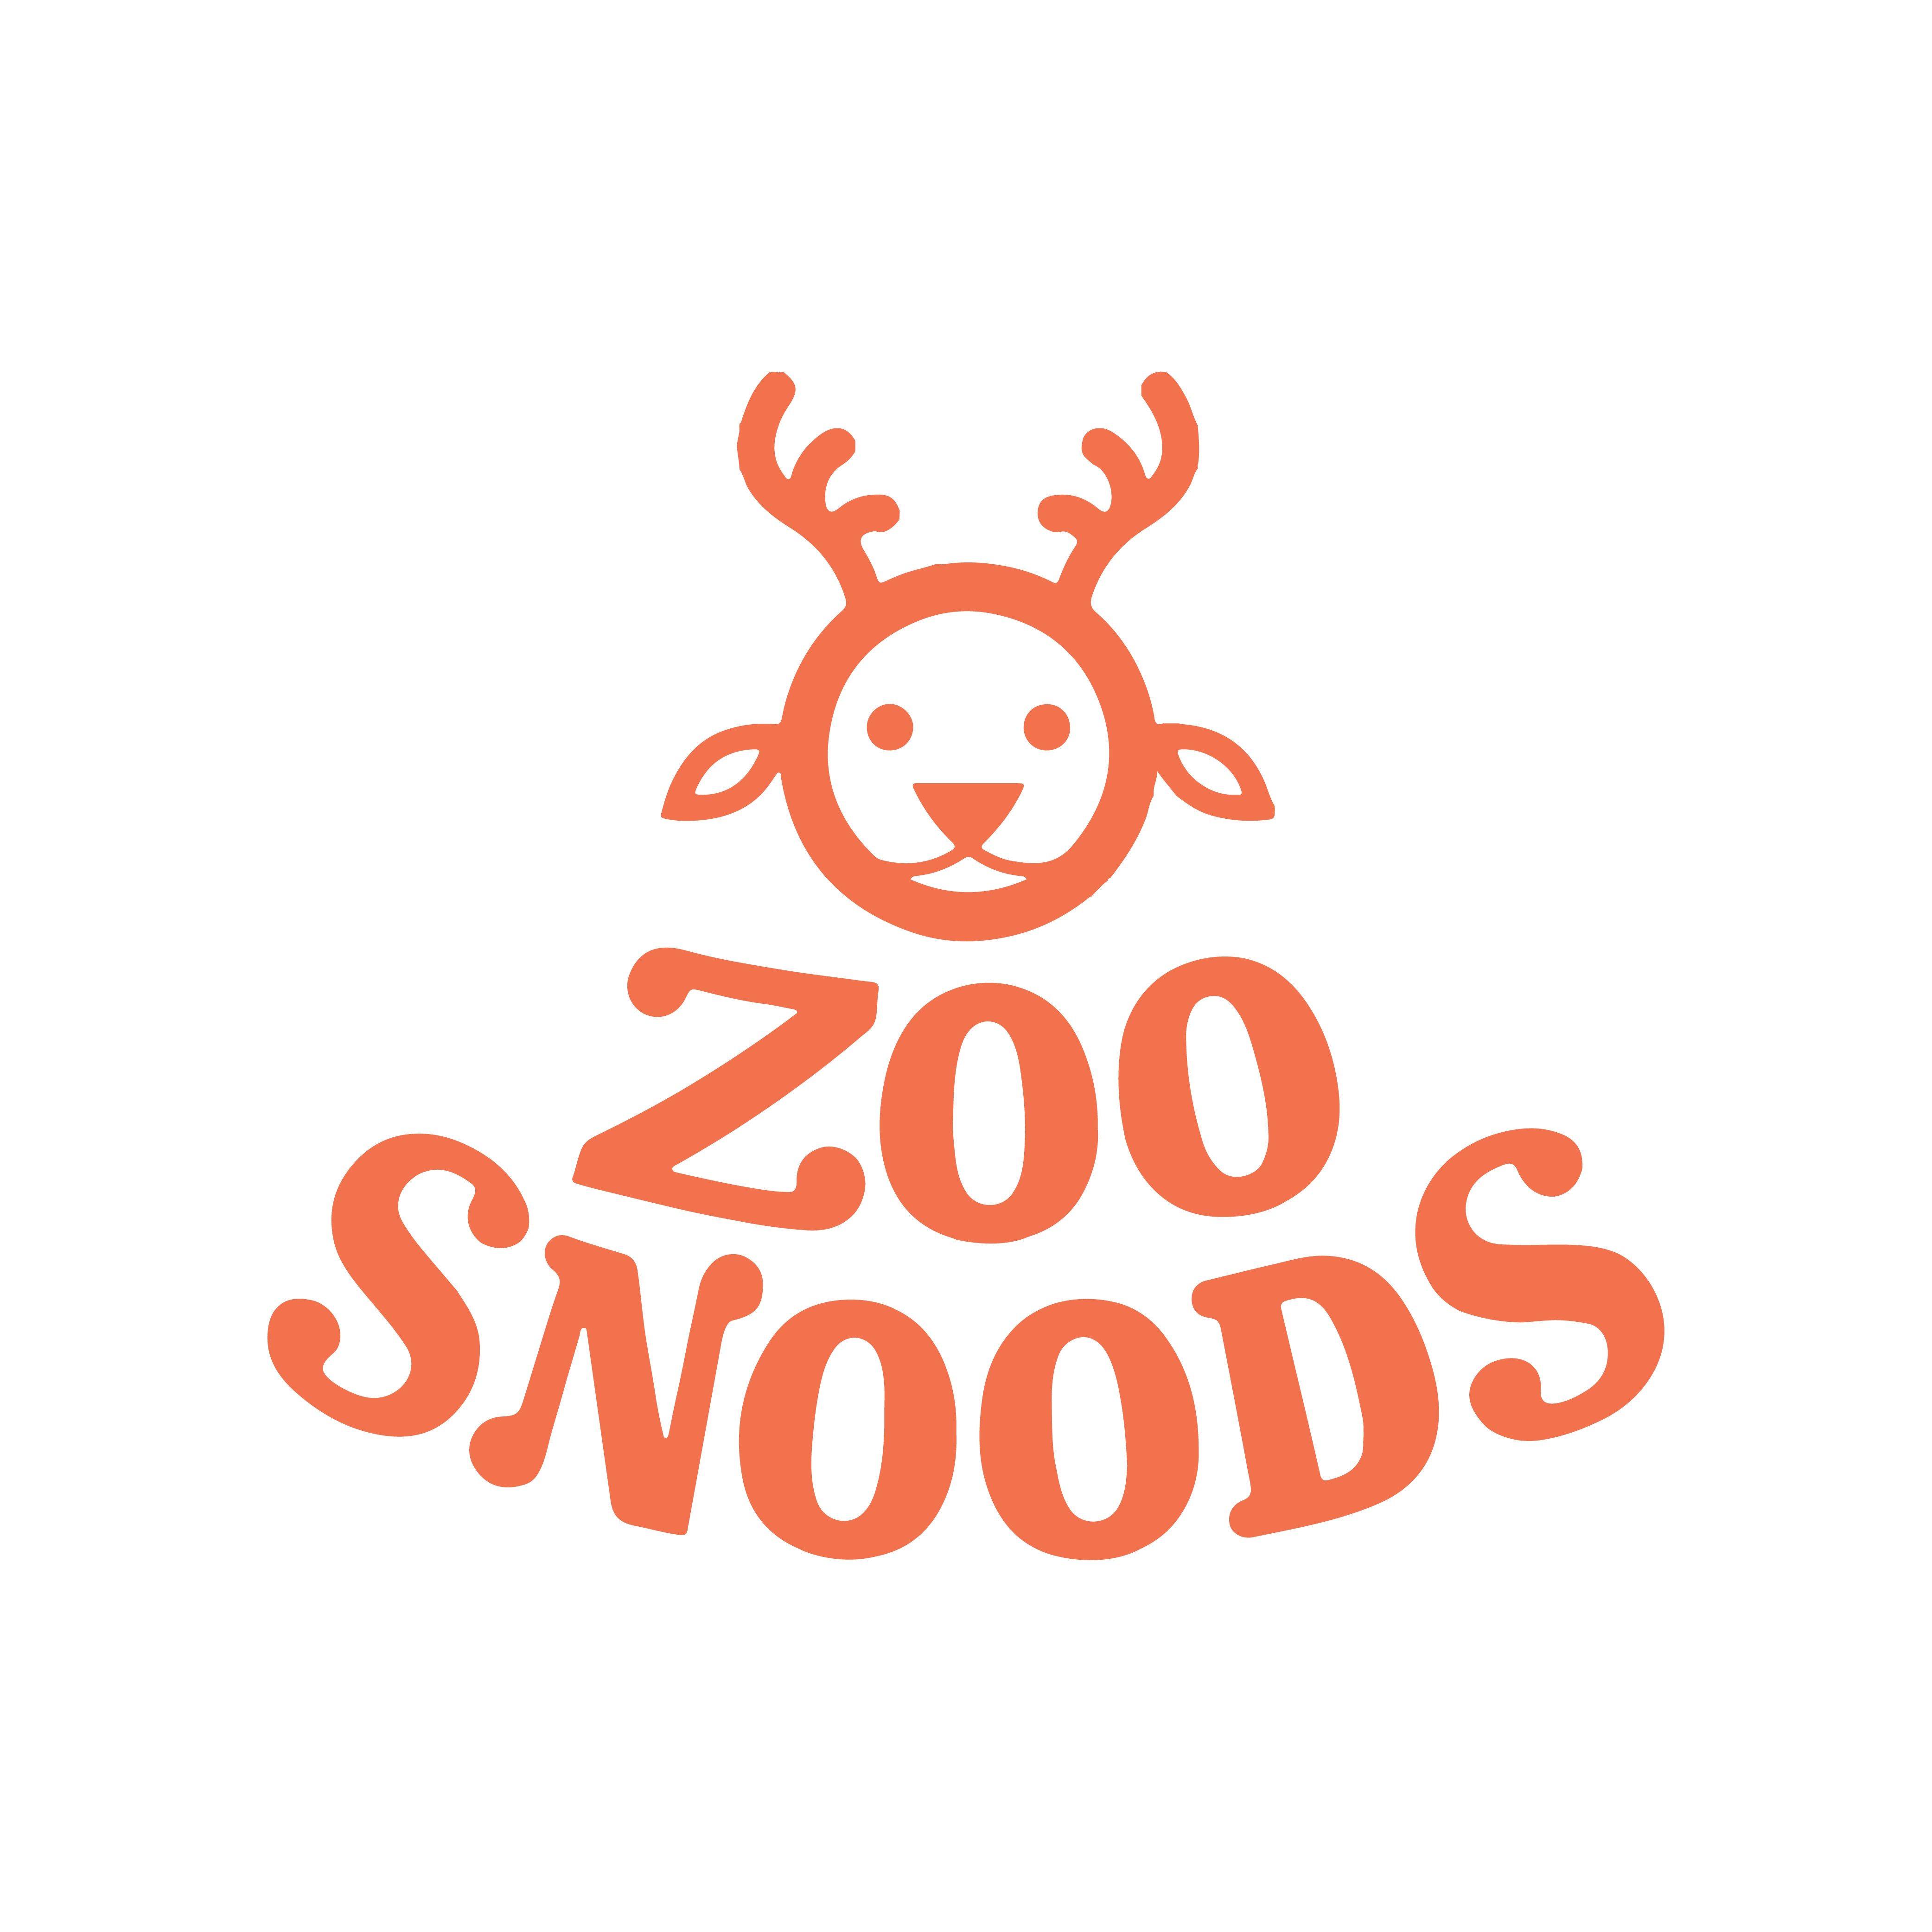 Zoo Snoods